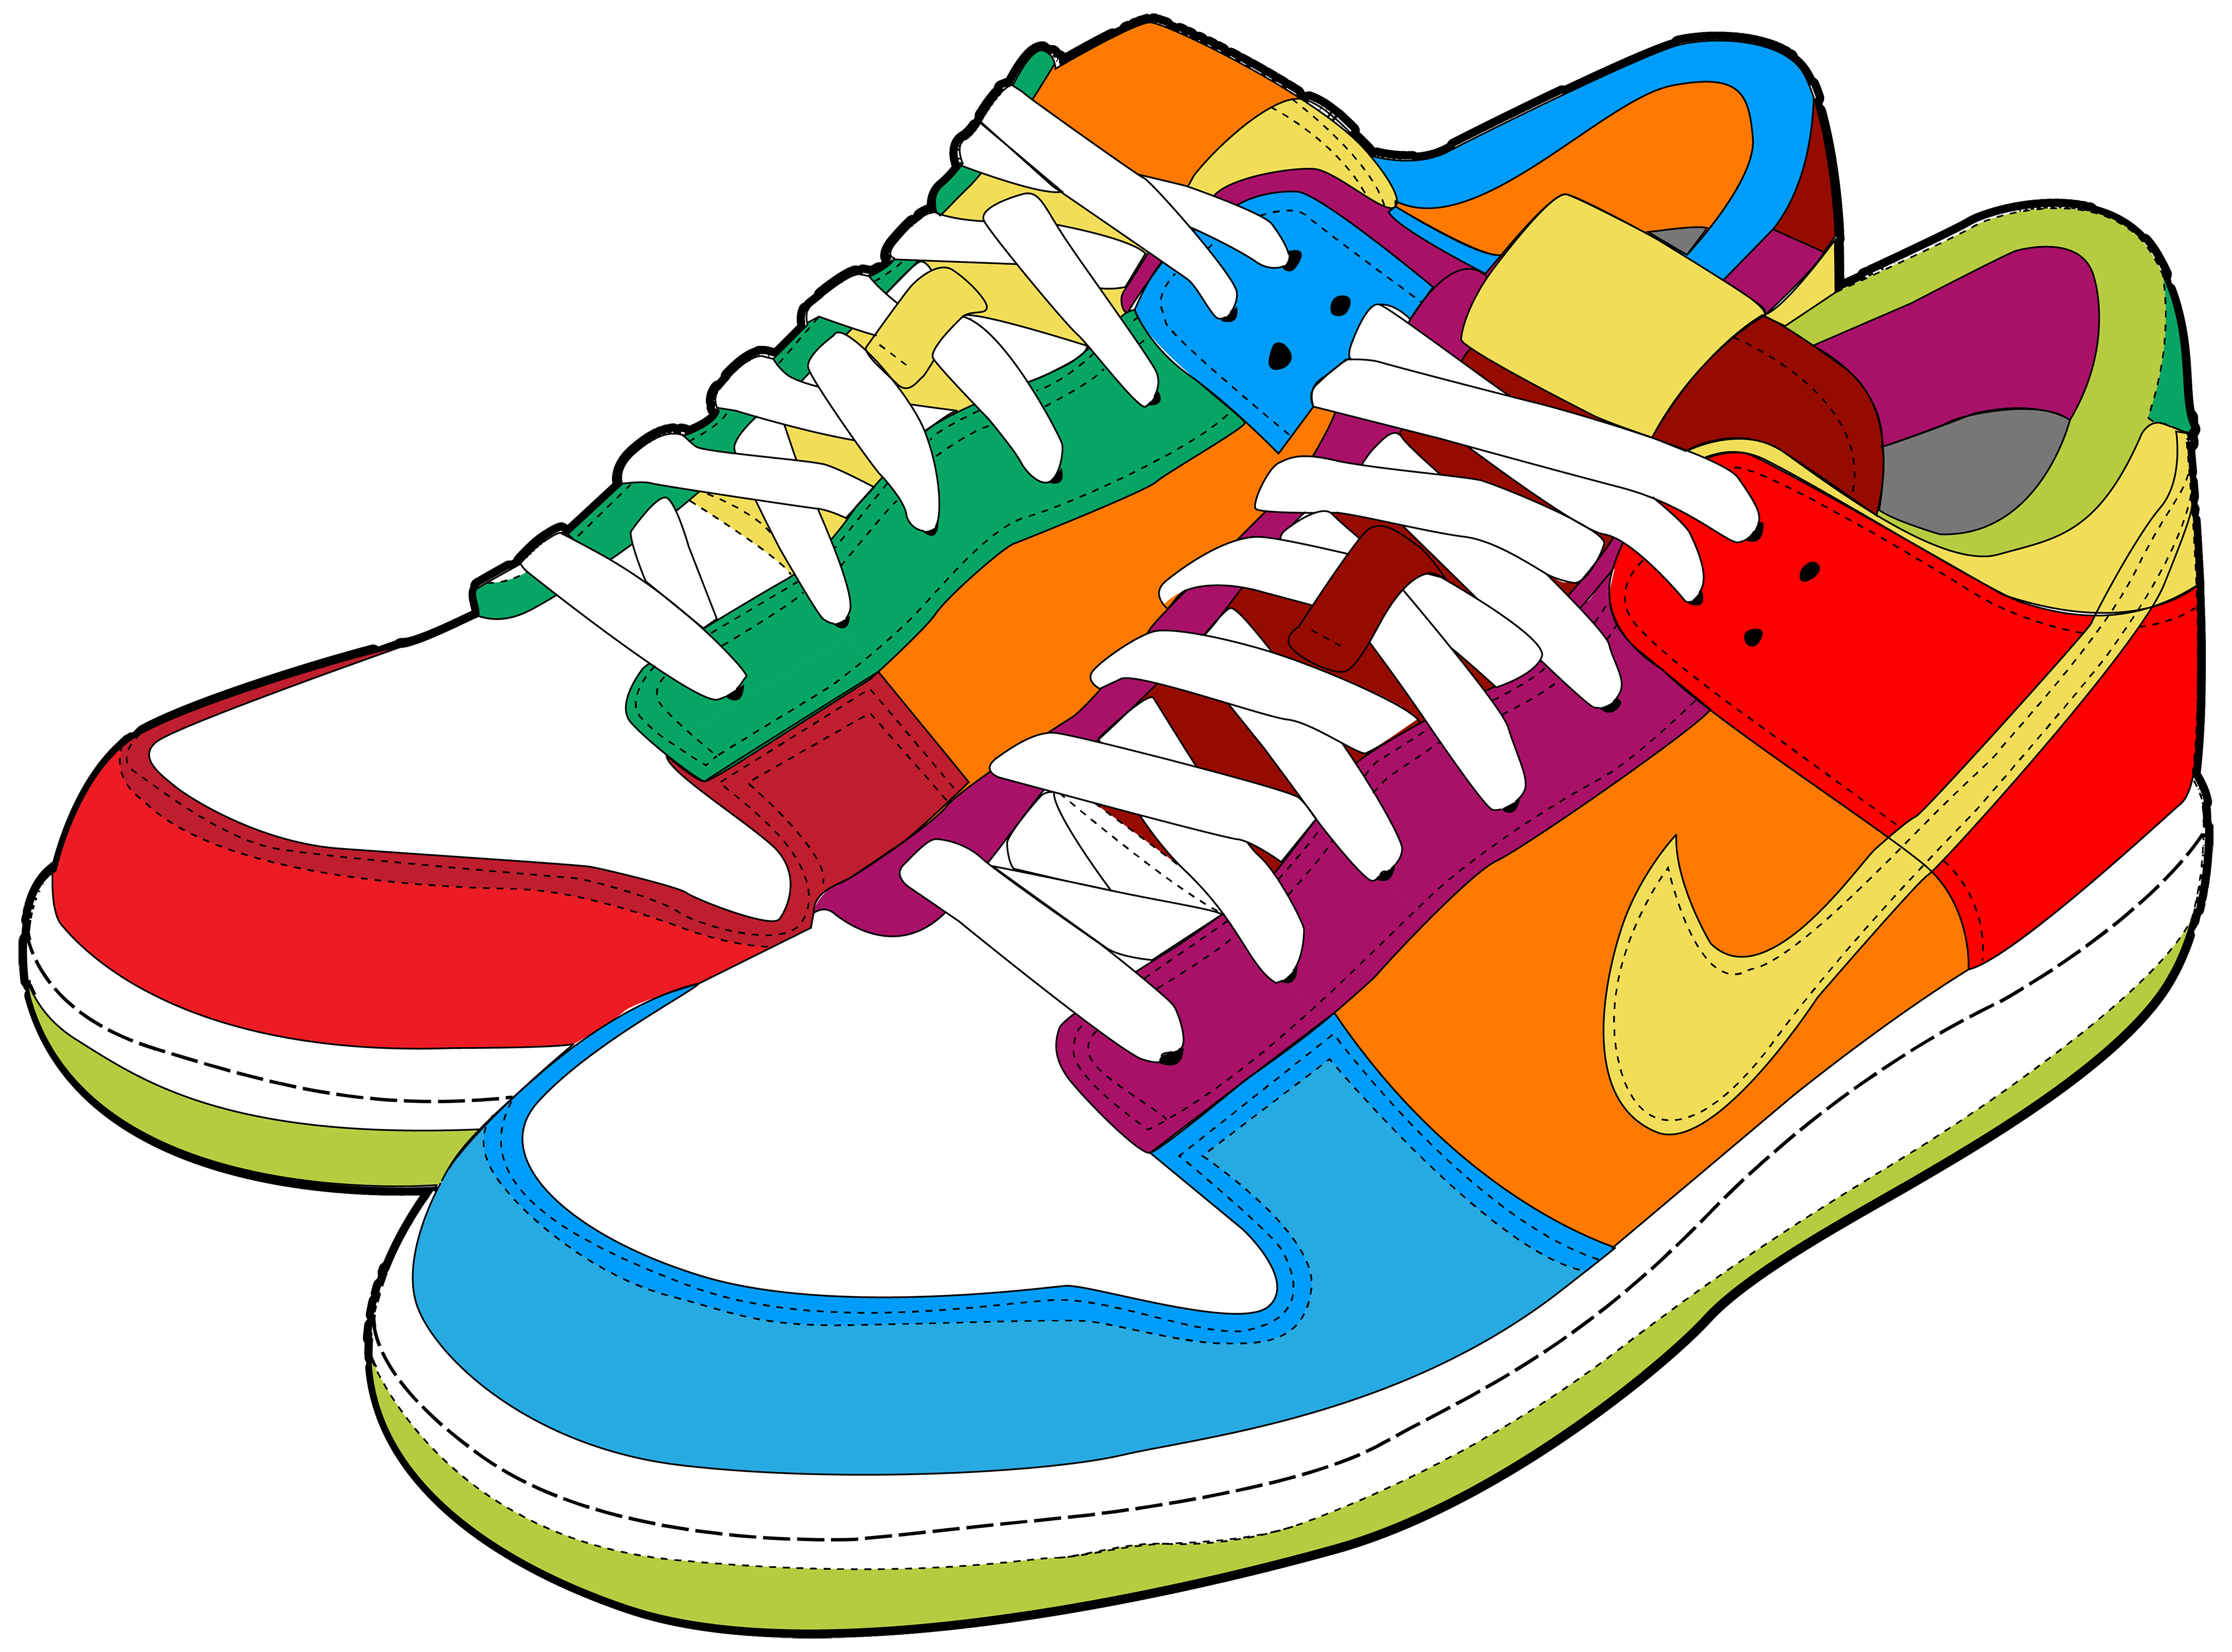 Converse clipart shoesclip. Colorful sneakers png shoes